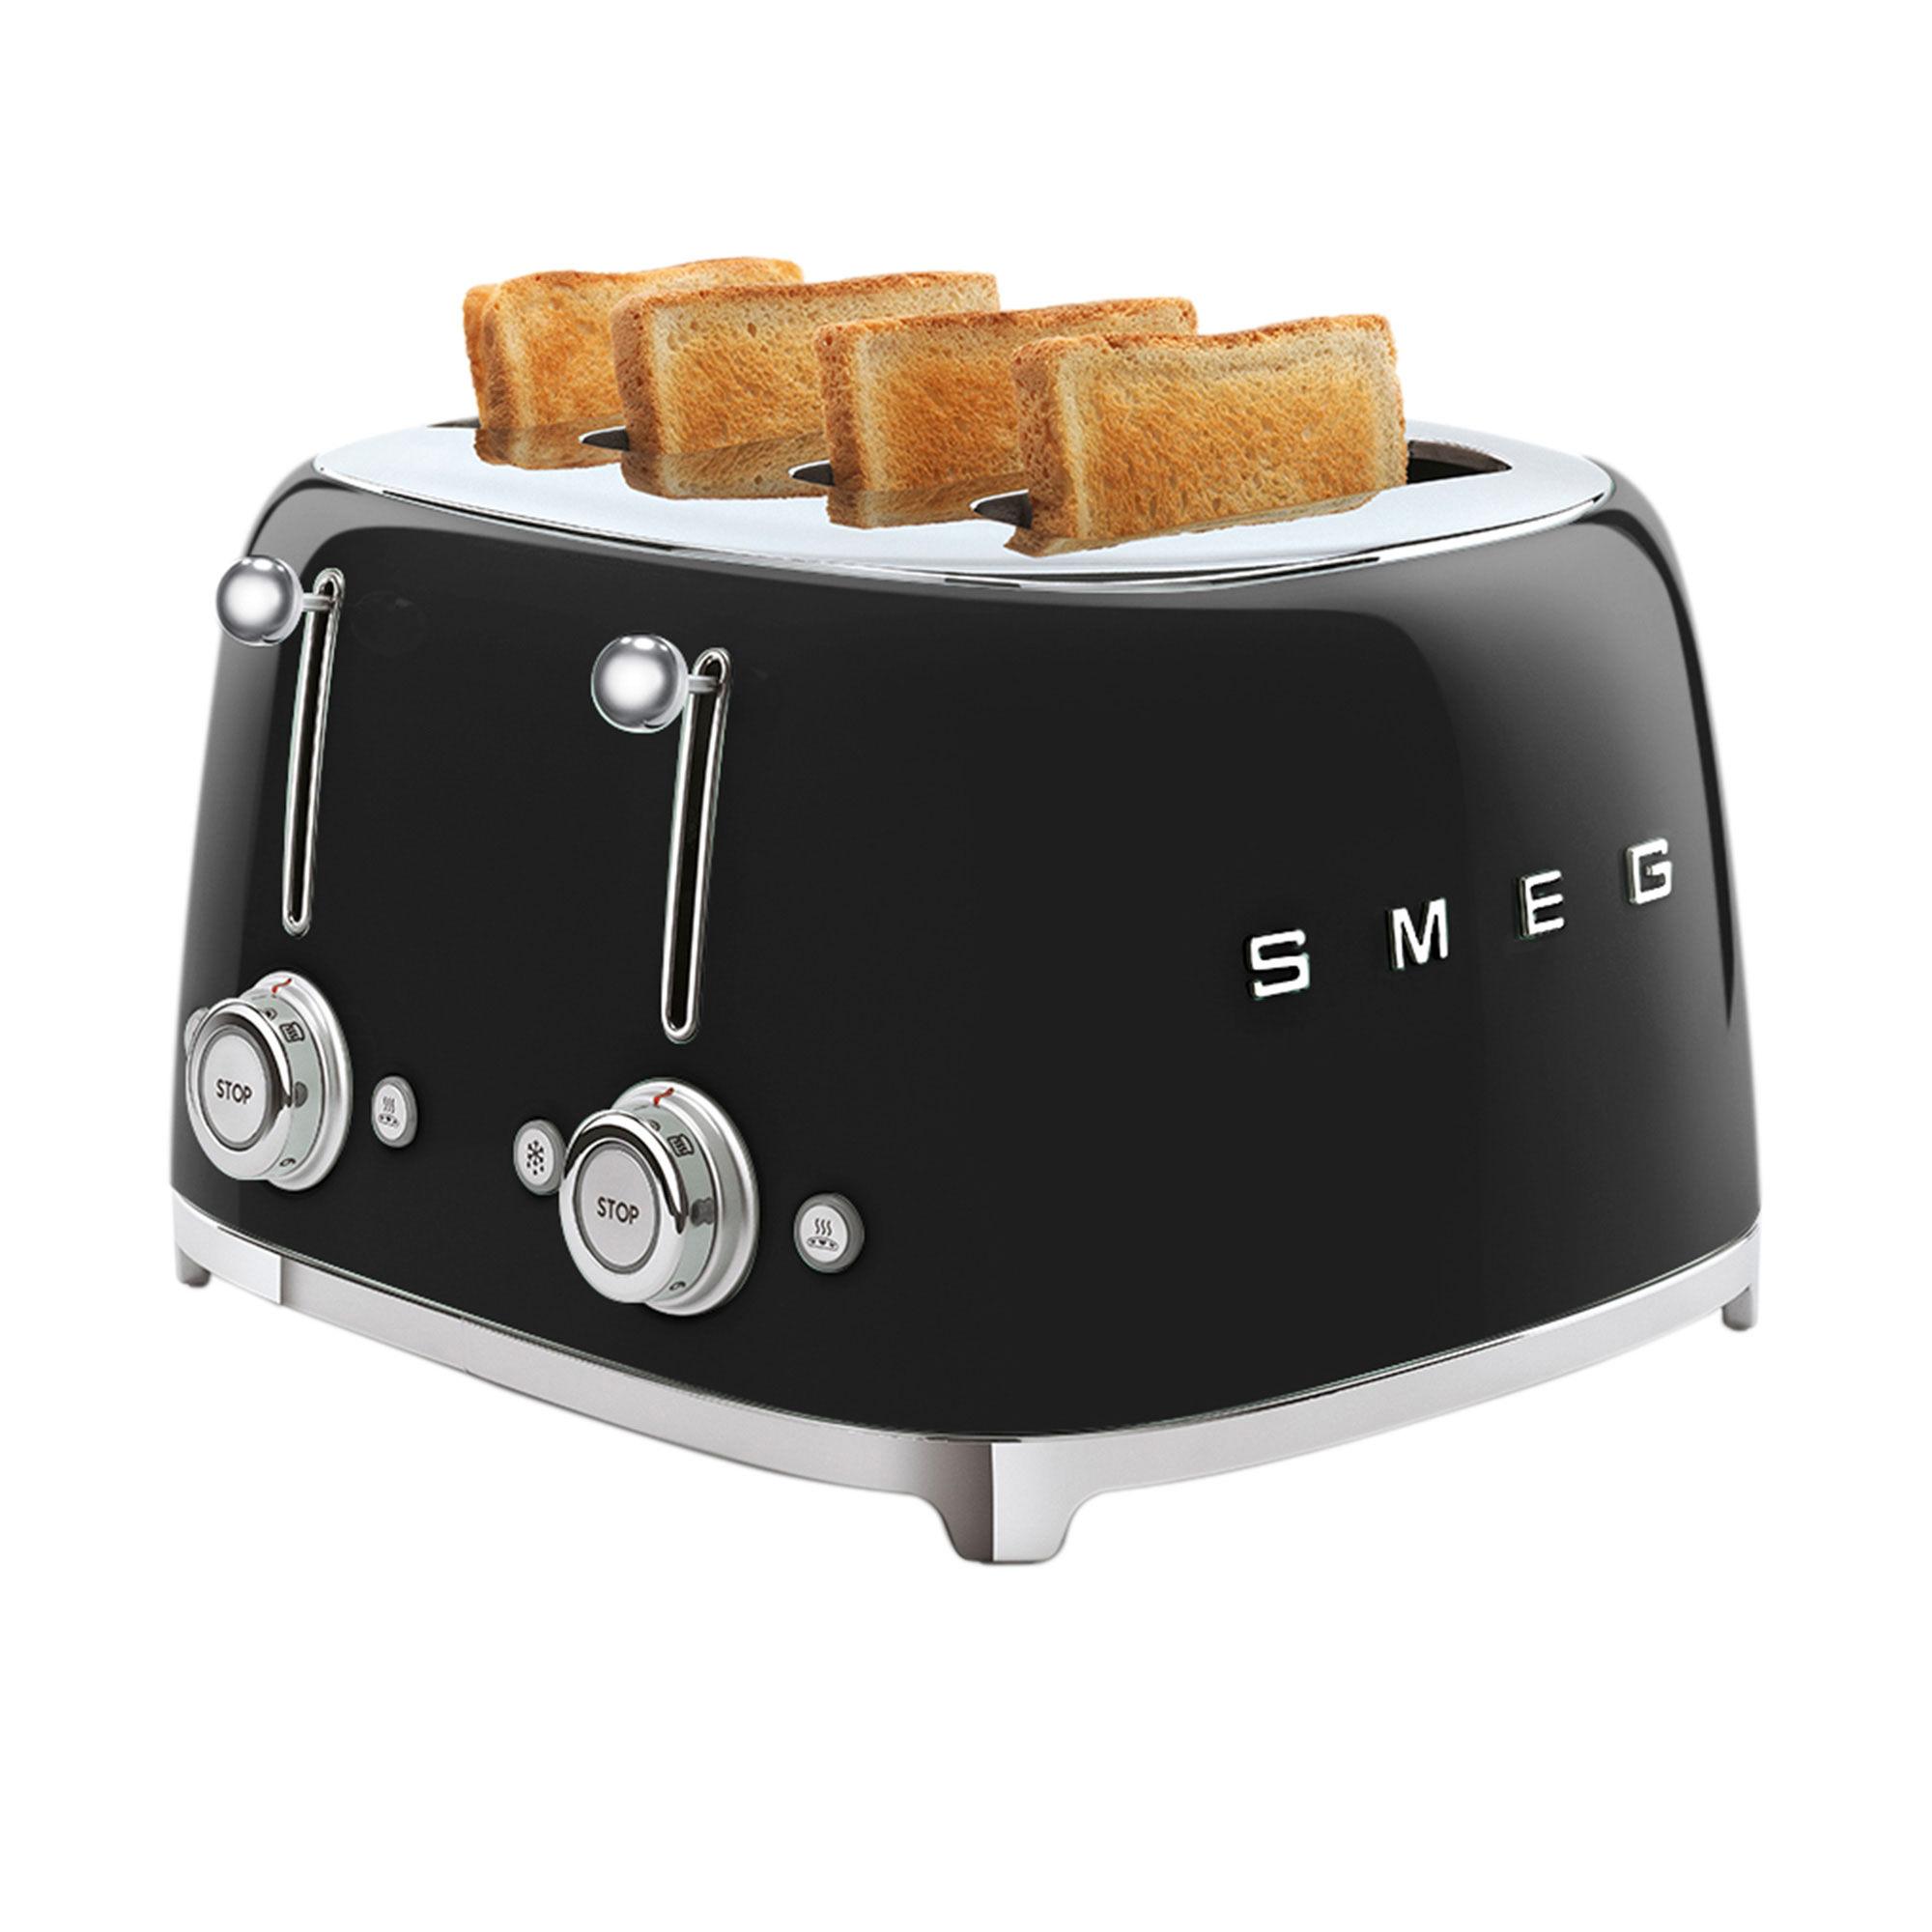 Smeg 50's Retro Style 4 Slot Toaster Black Image 3